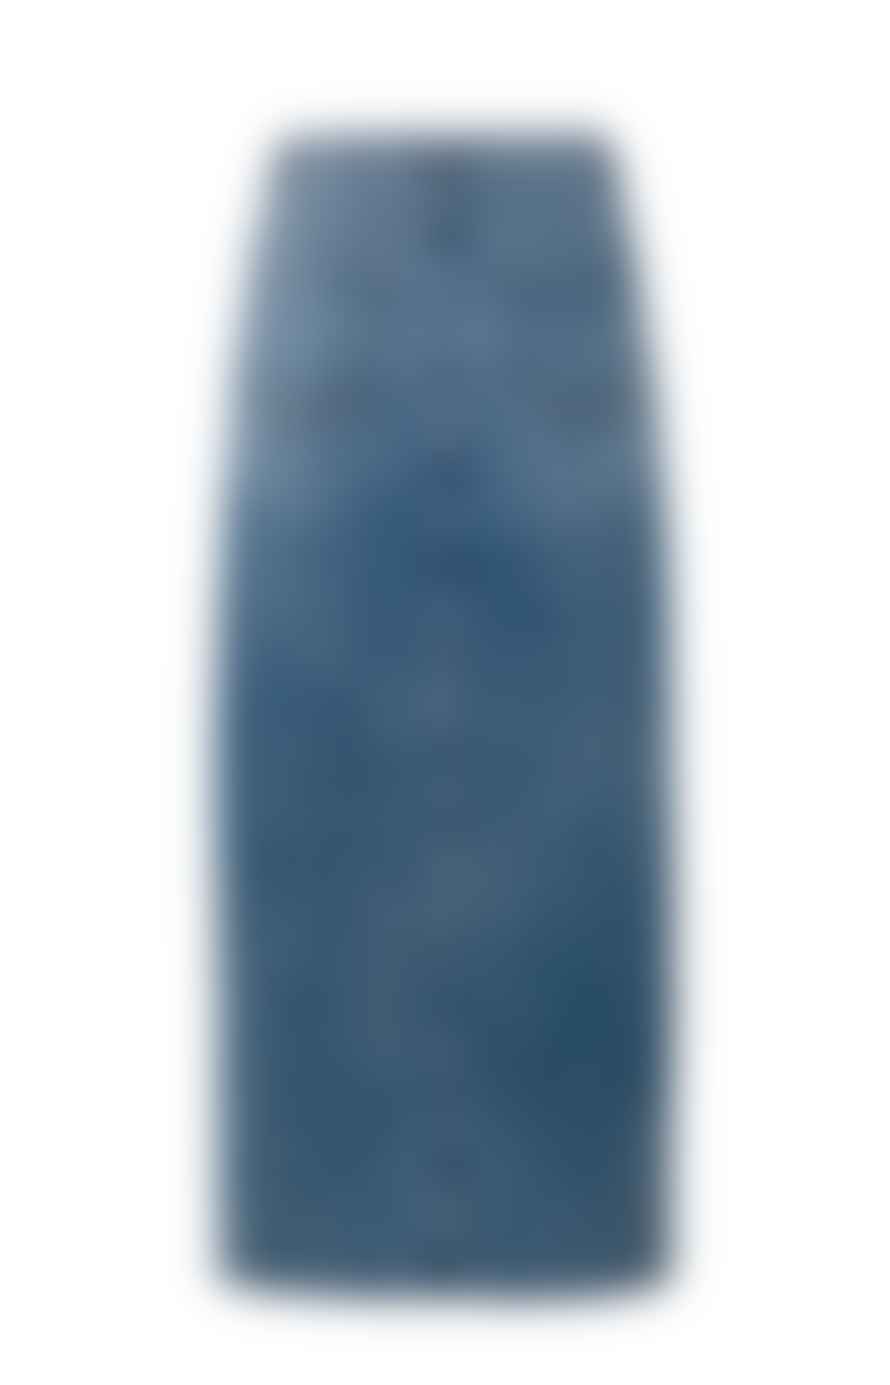 Yaya Denim Maxi Skirt With Slit | Blue Denim